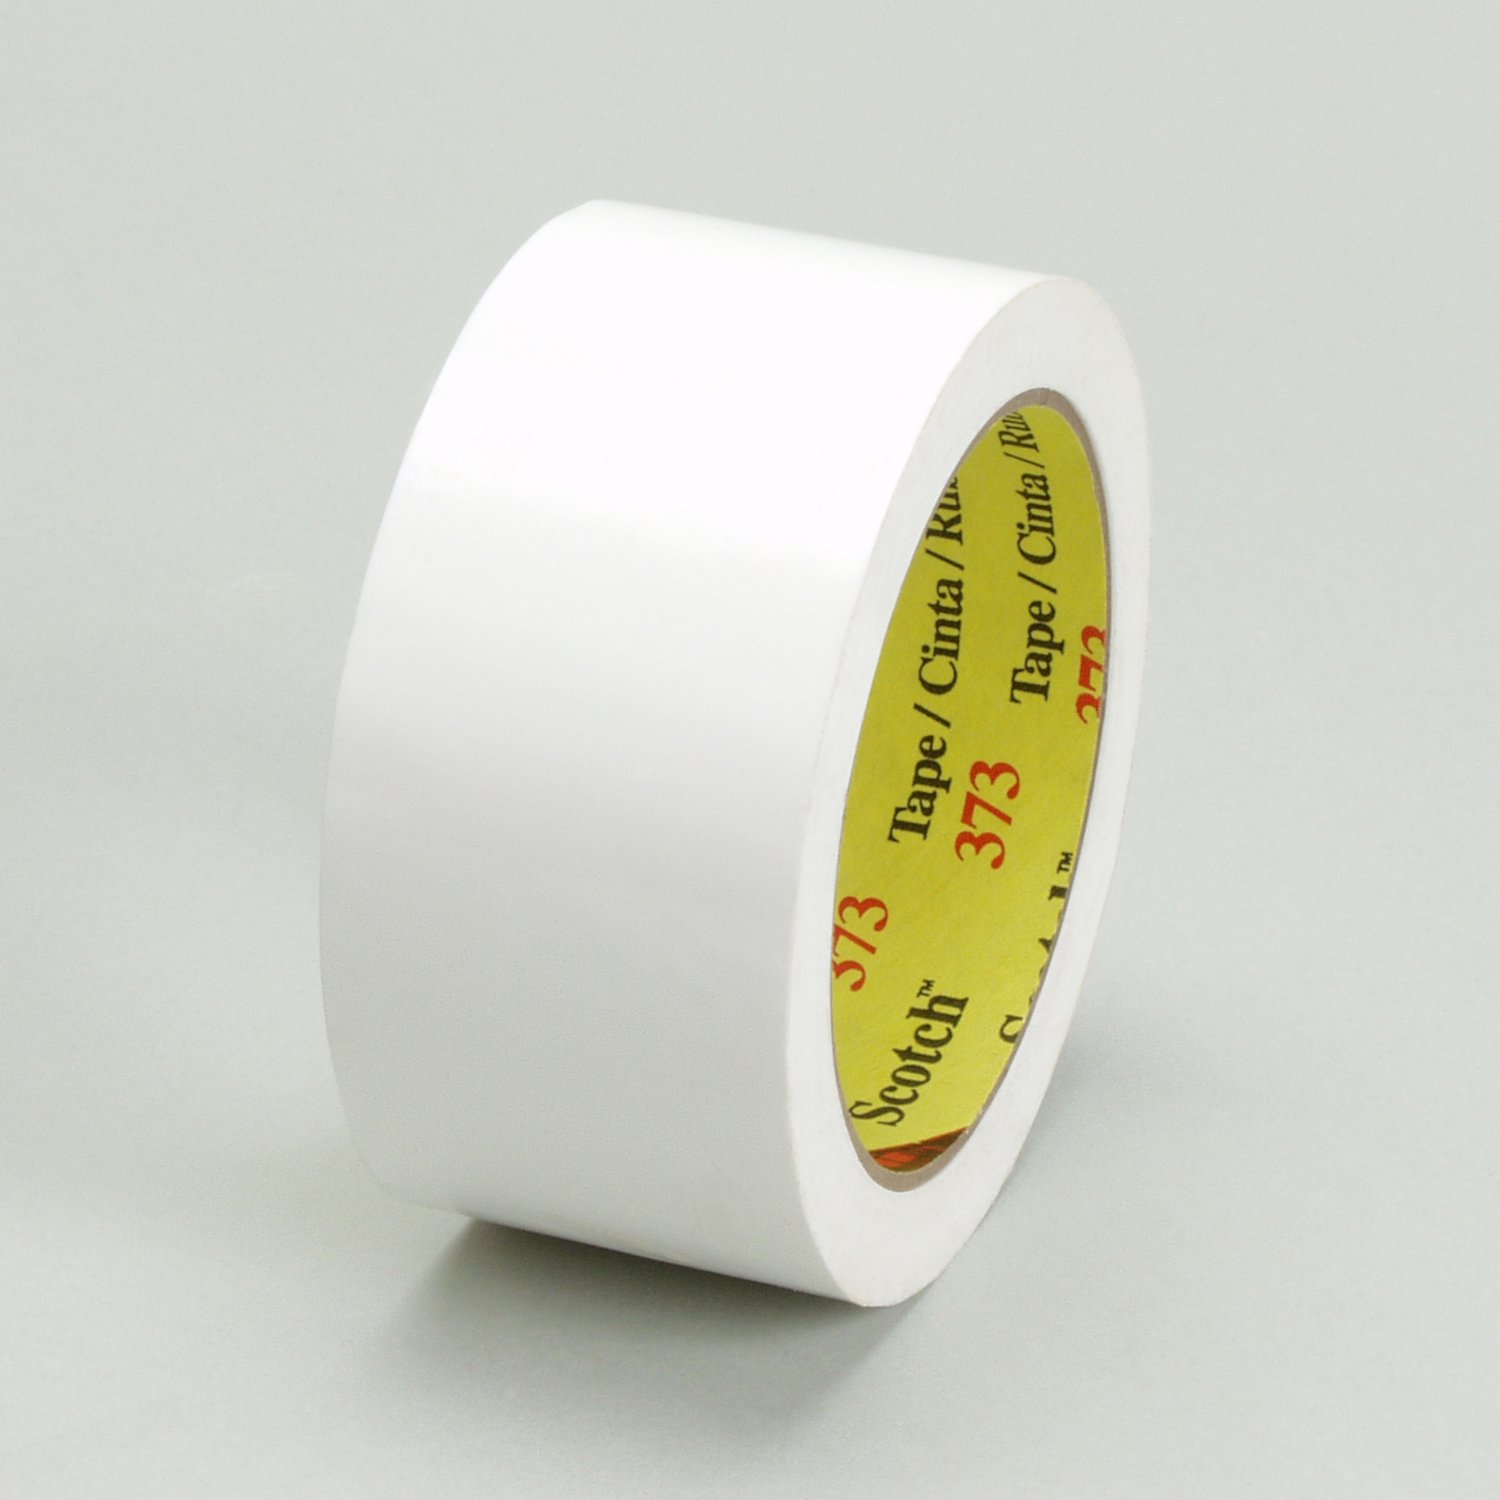 7100176391 - Scotch Custom Printed Box Sealing Tape 373CP, White, 48 mm x 50 m,
36/Case